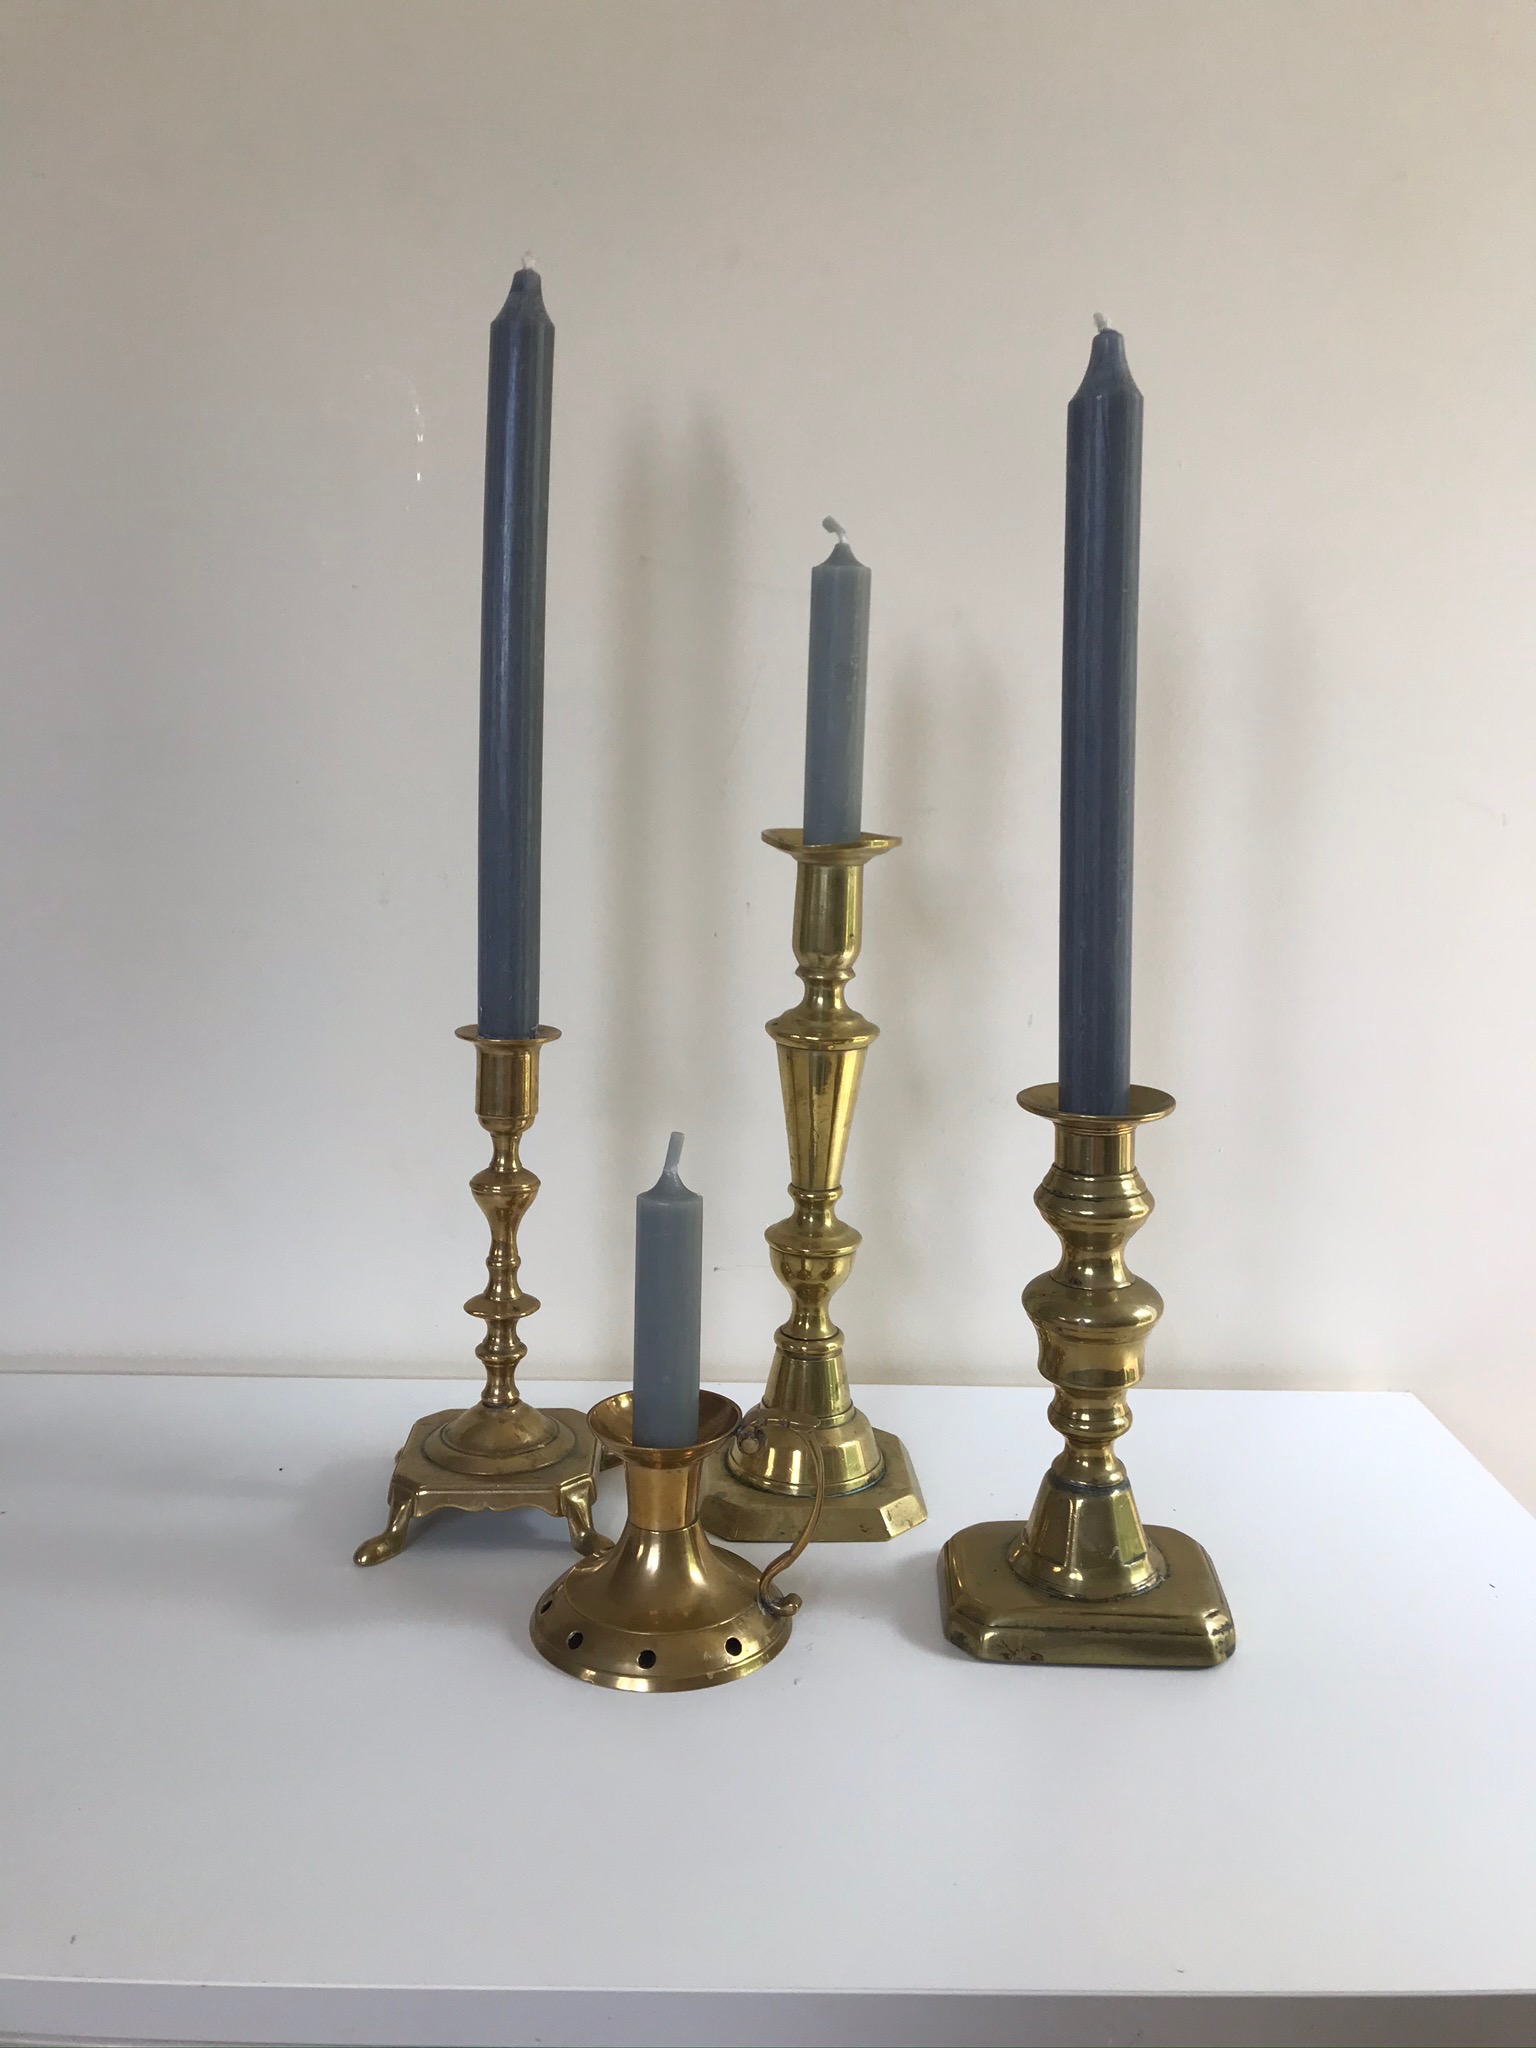 Mismatched Vintage Brass Candlesticks